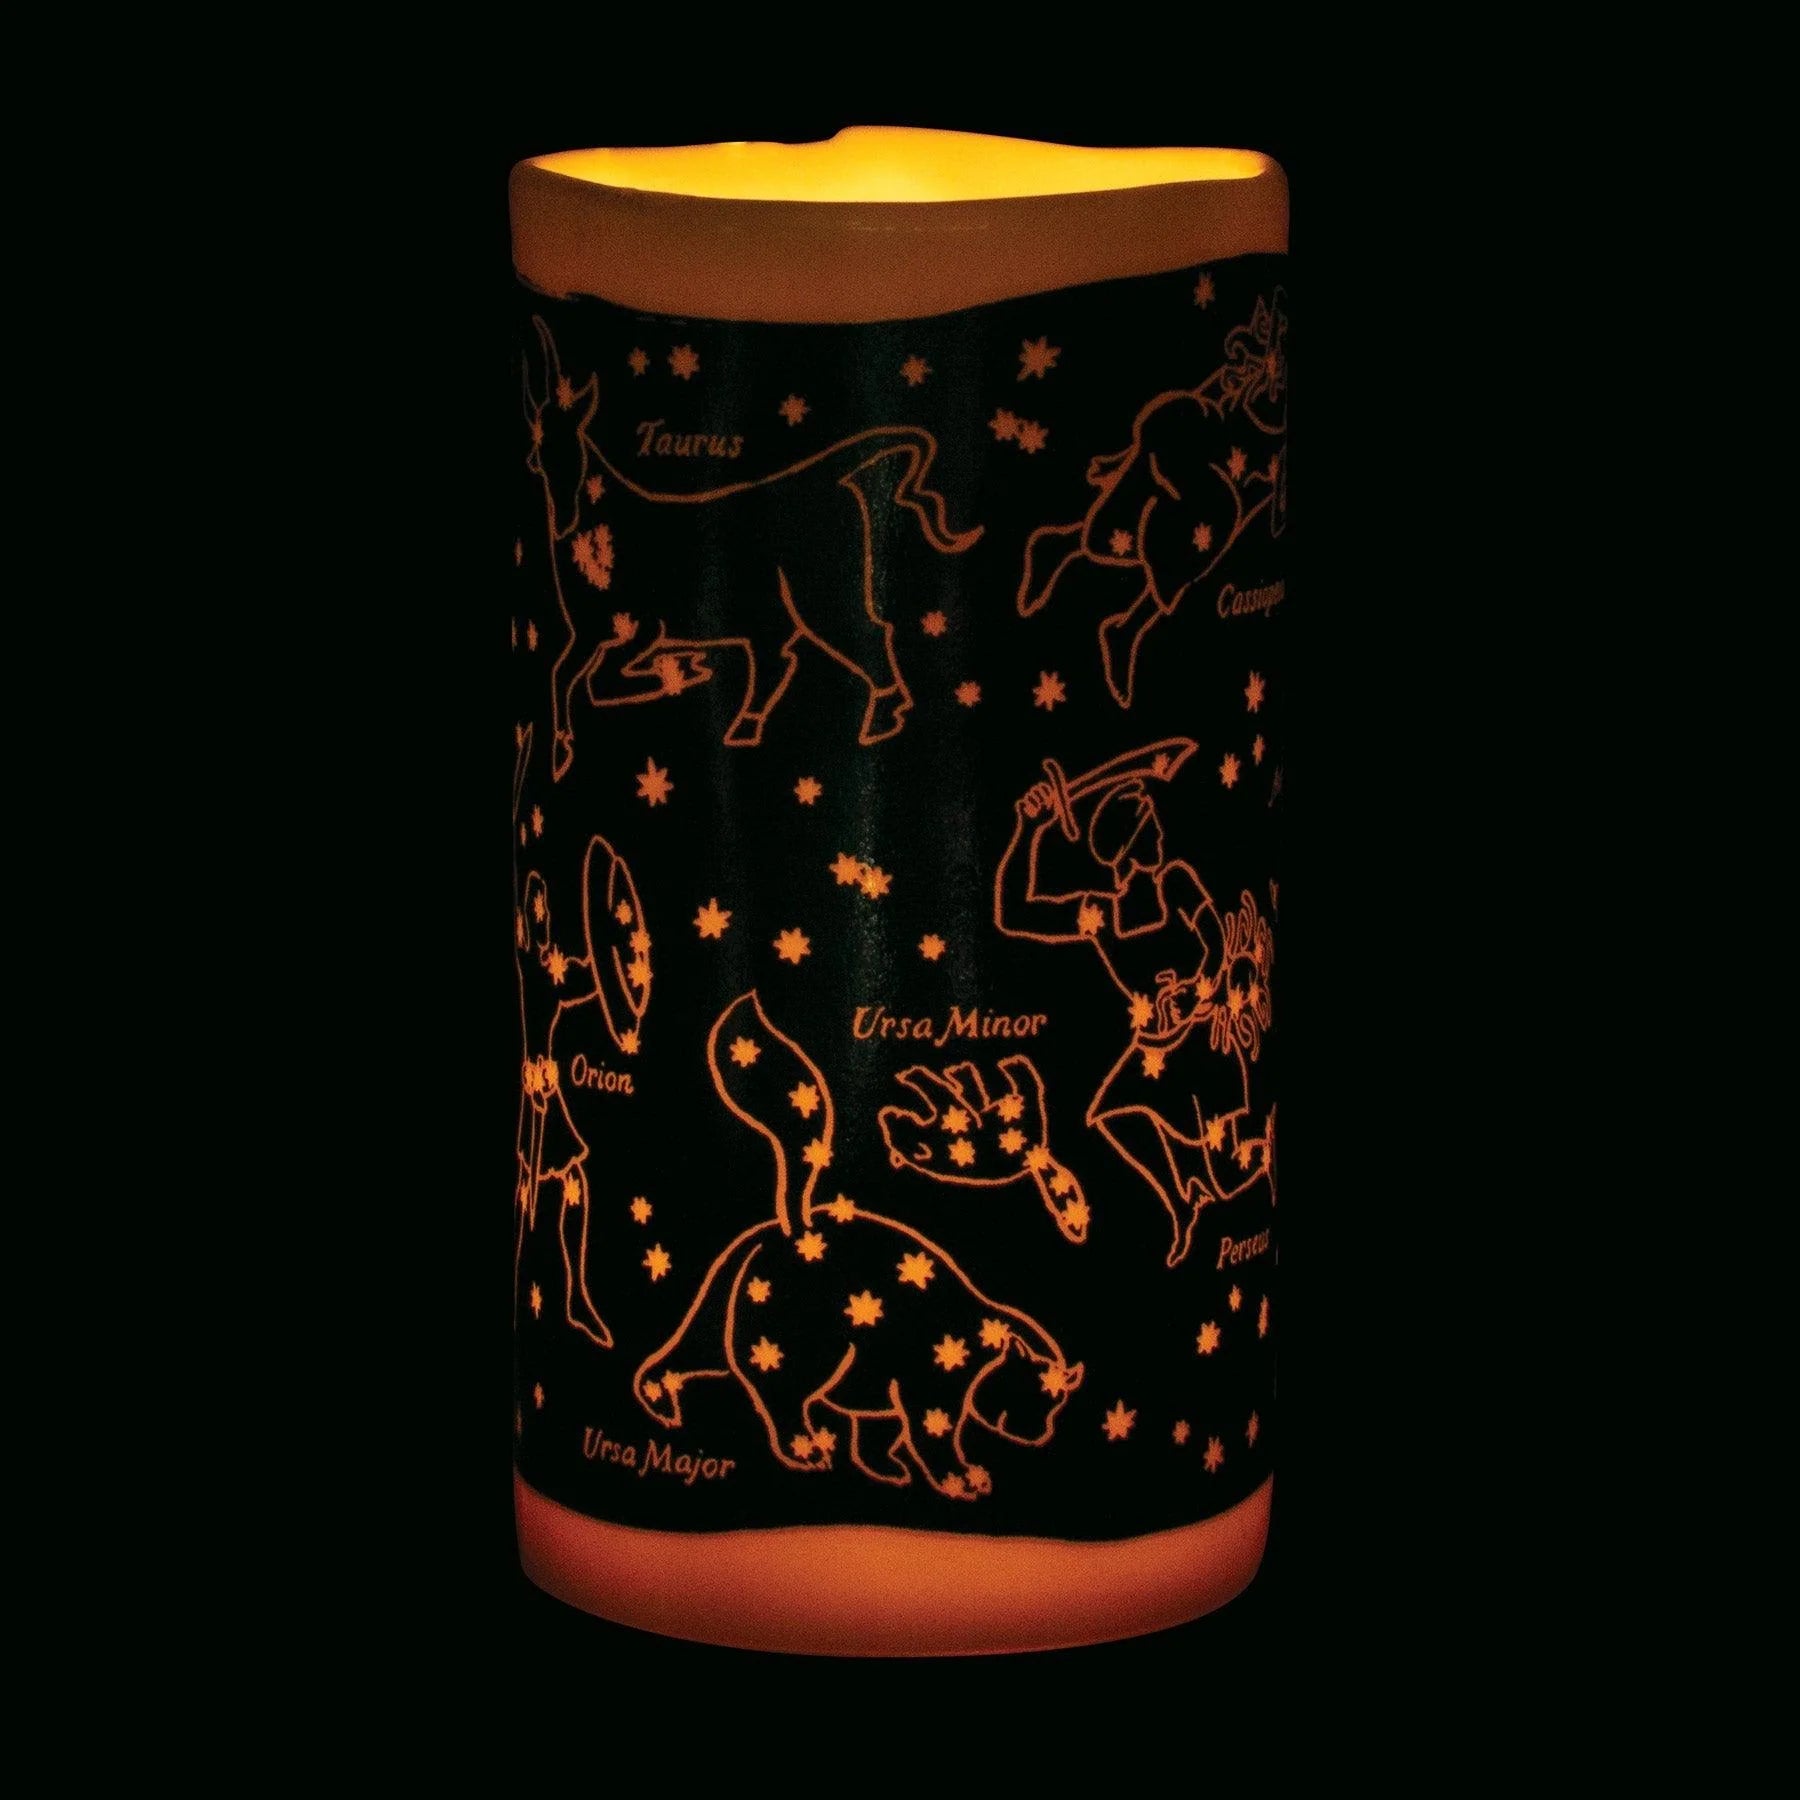 Constellation Tea Light Holder